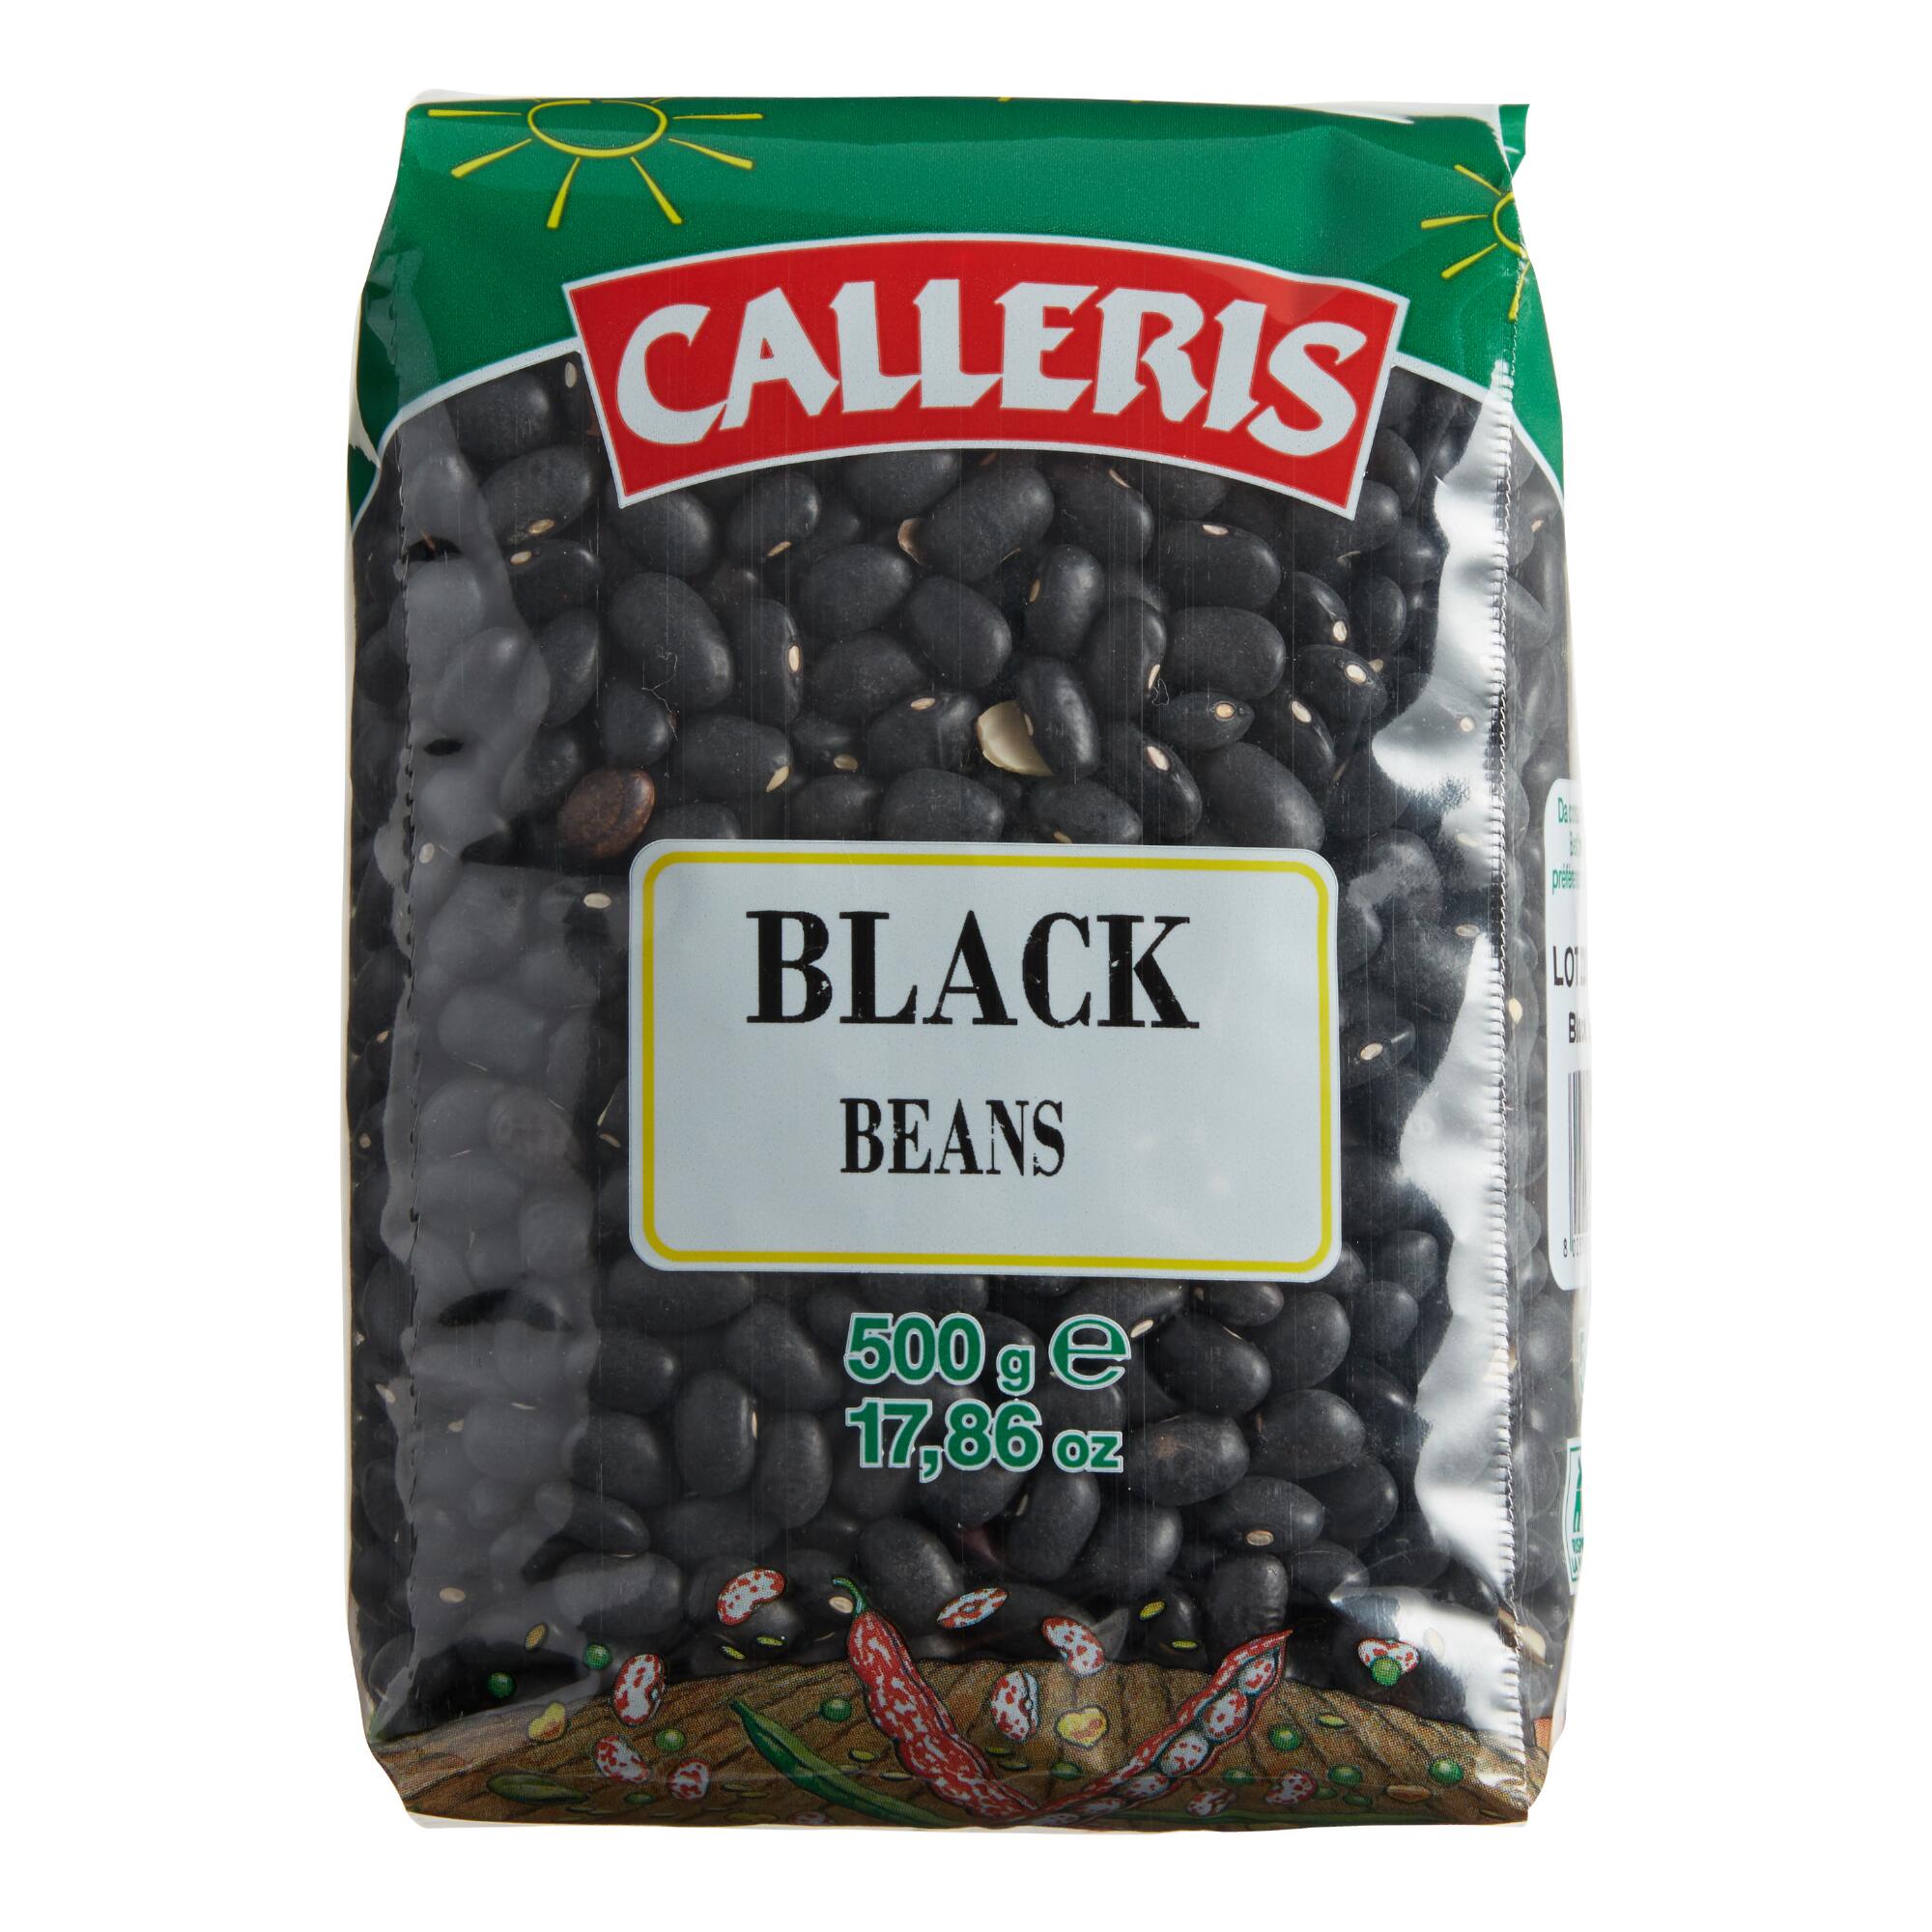 Calleris Dry Black Beans Set of 2 by World Market